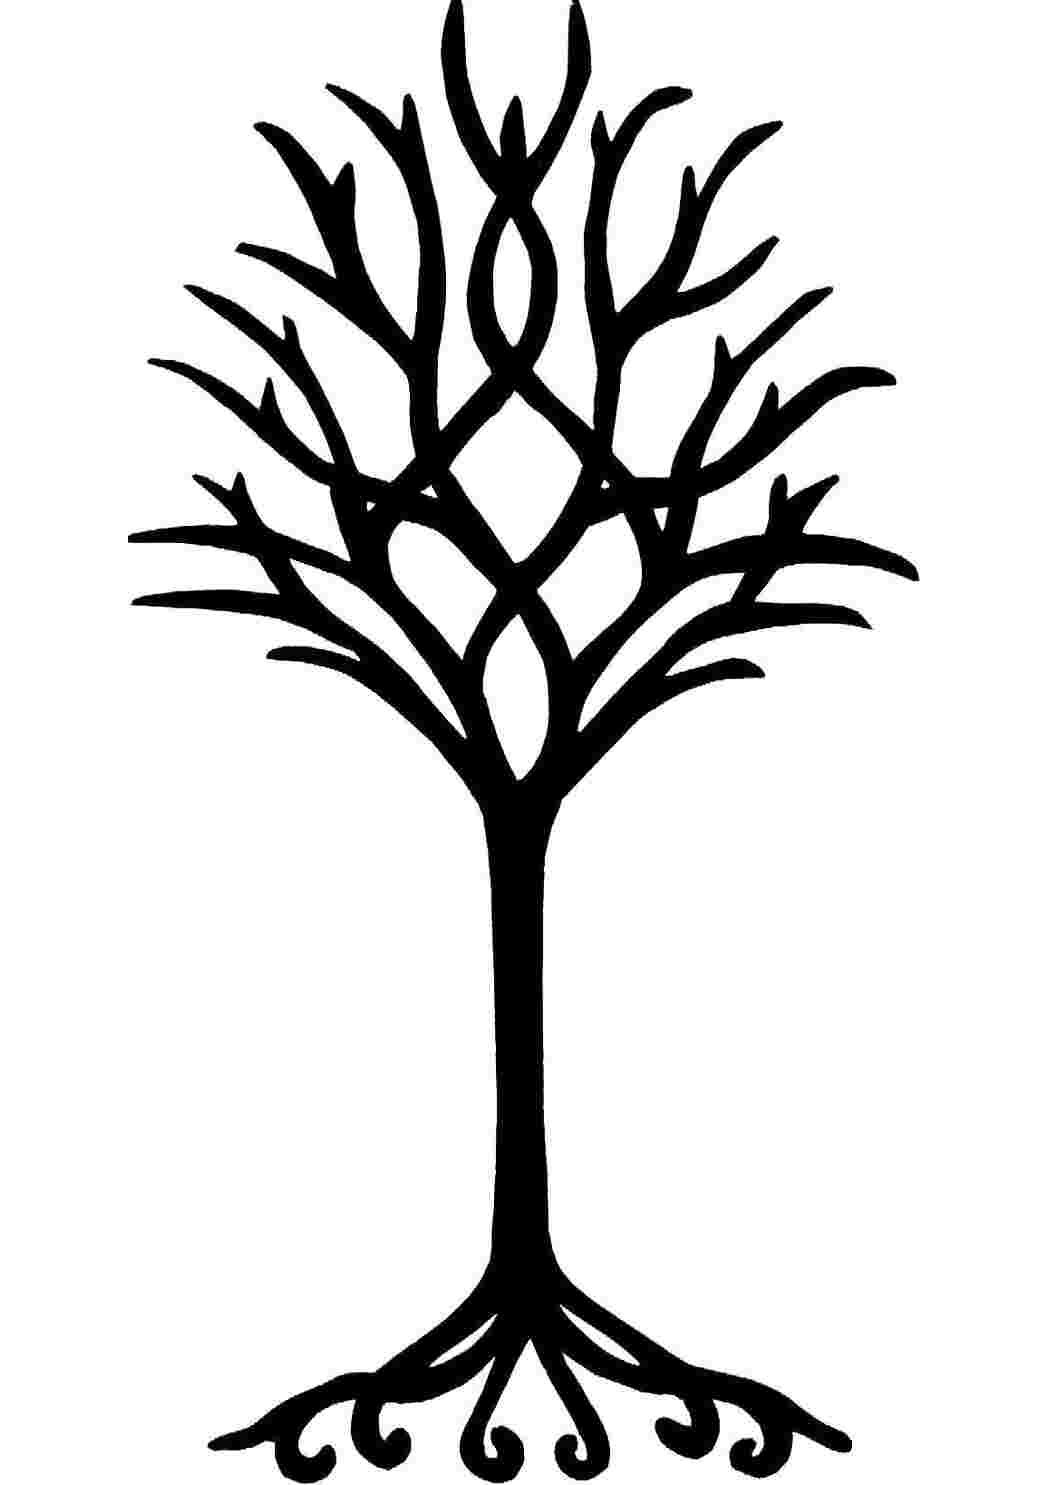 Раскраска дерево дерева. Дерево с ветками и корнями